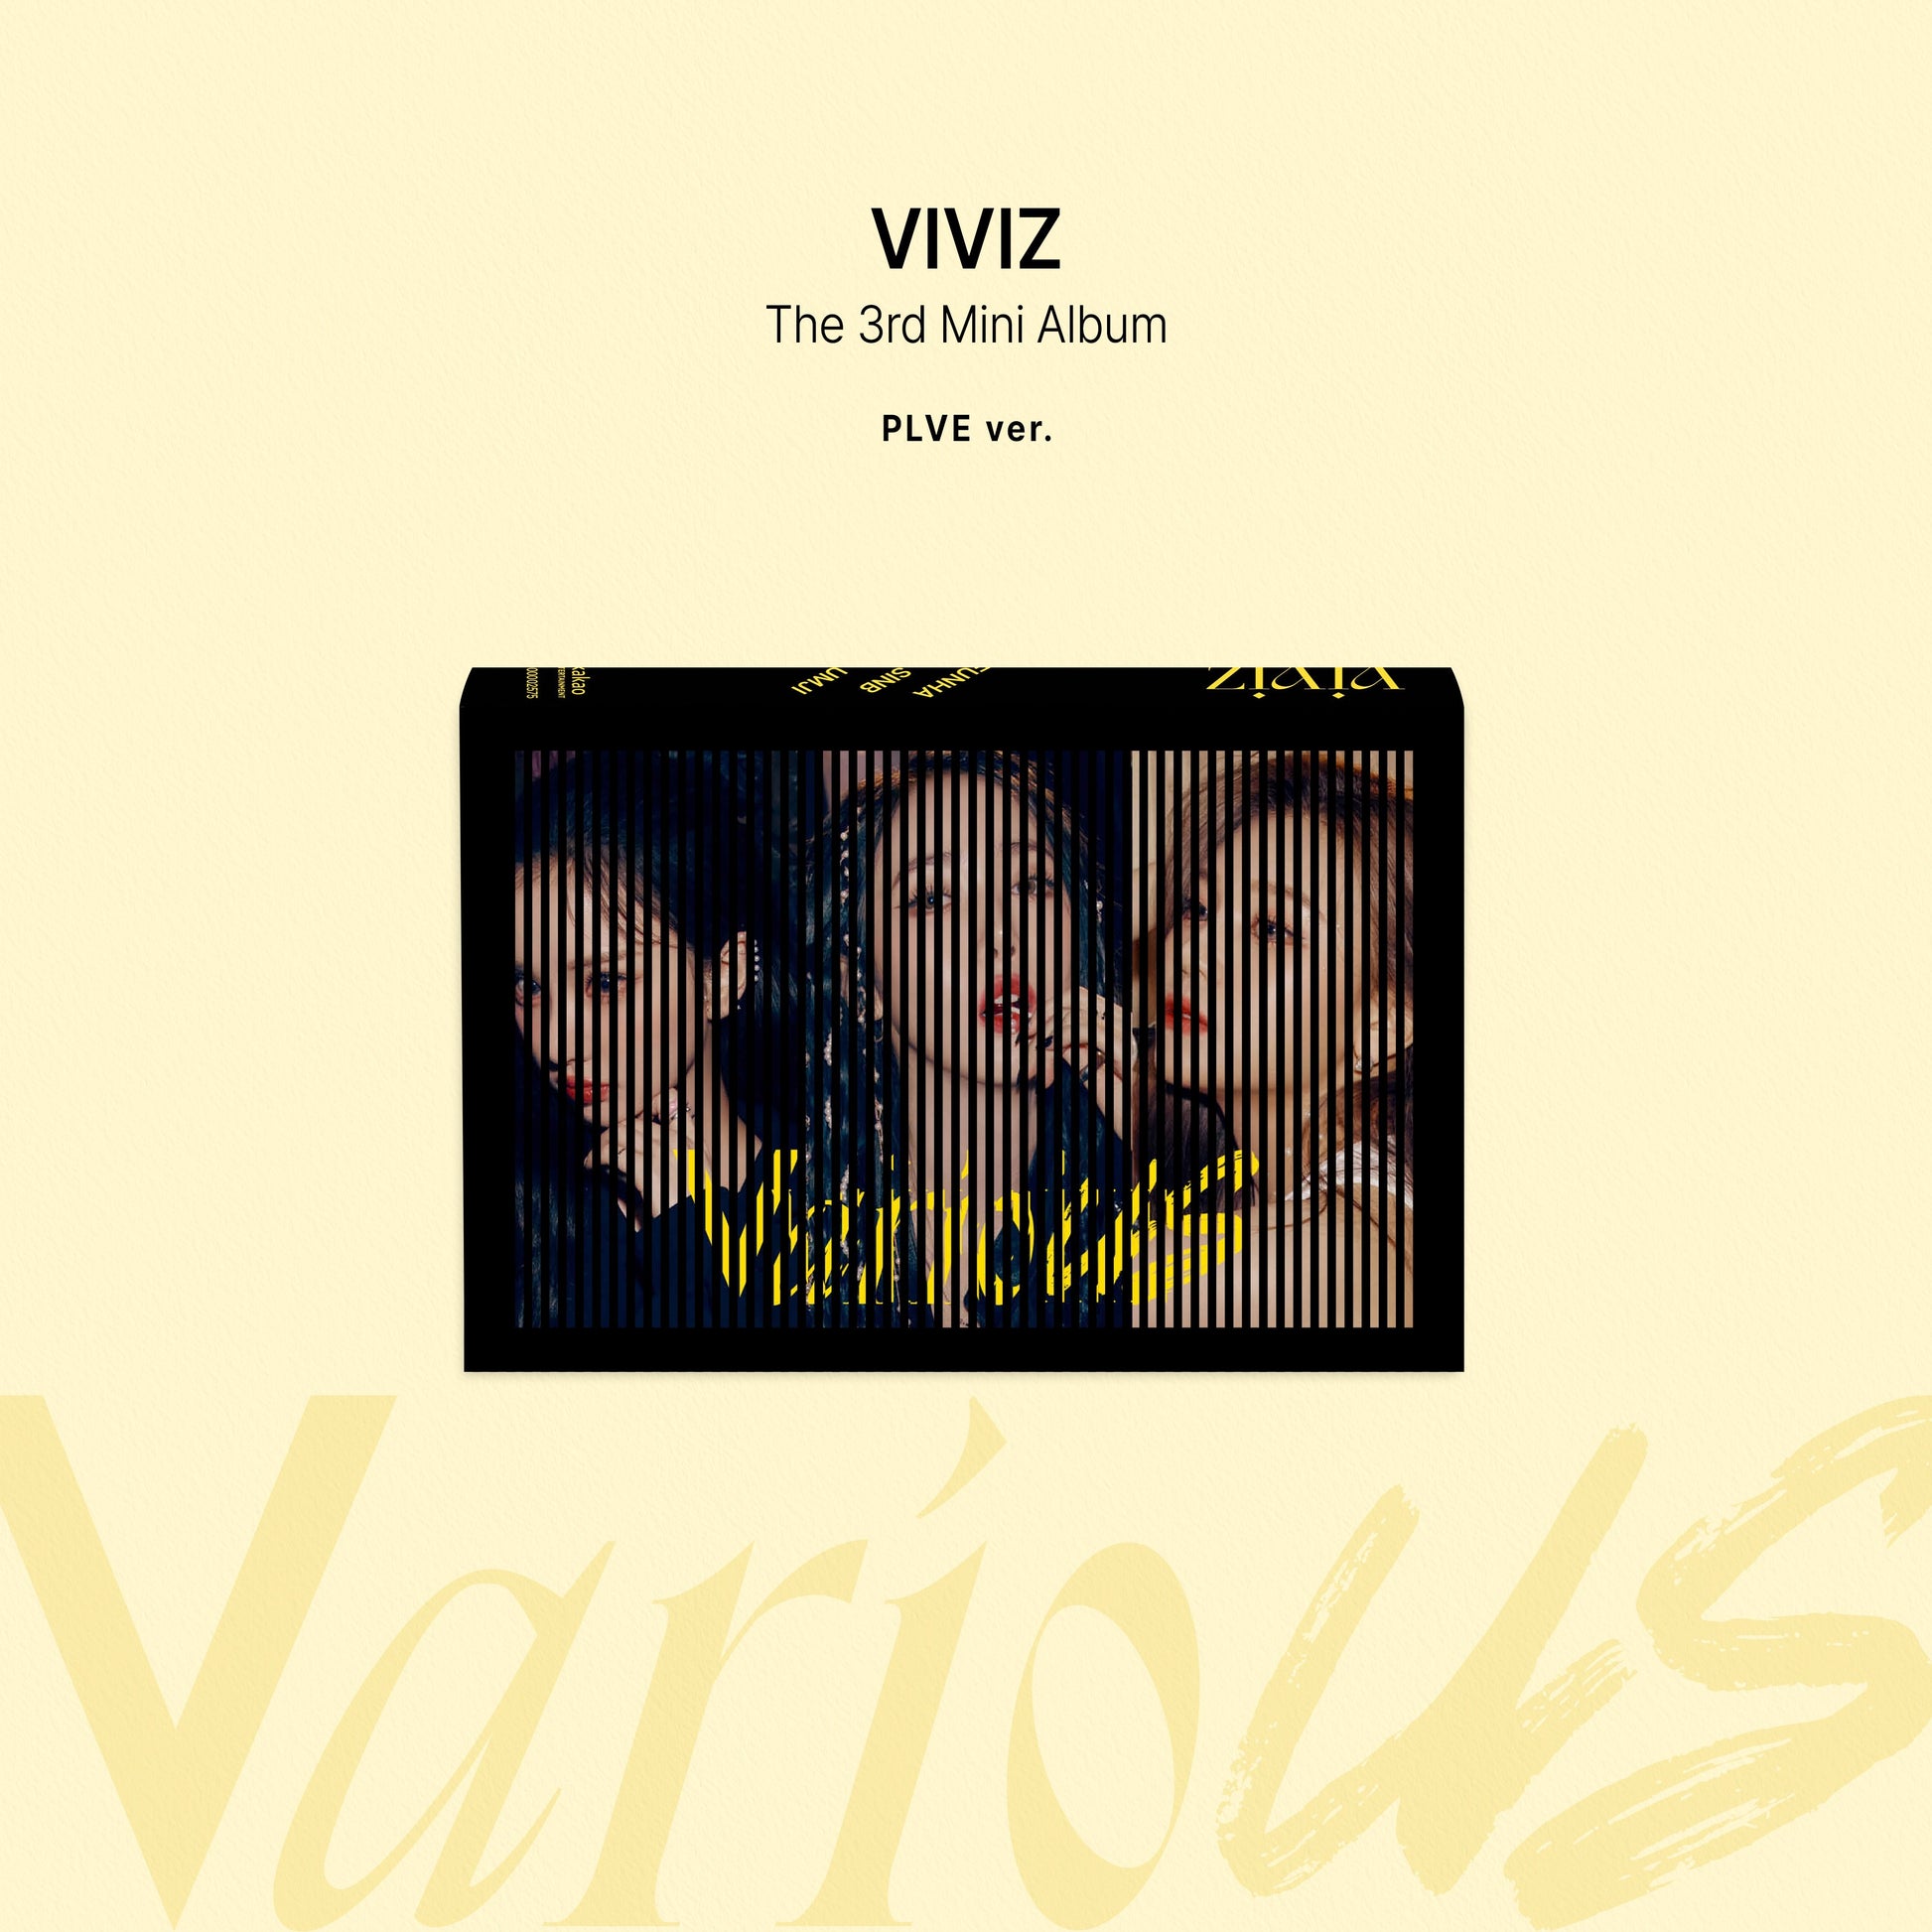 VIVIZ 3RD MINI ALBUM 'VARIOUS' (PLVE) COVER